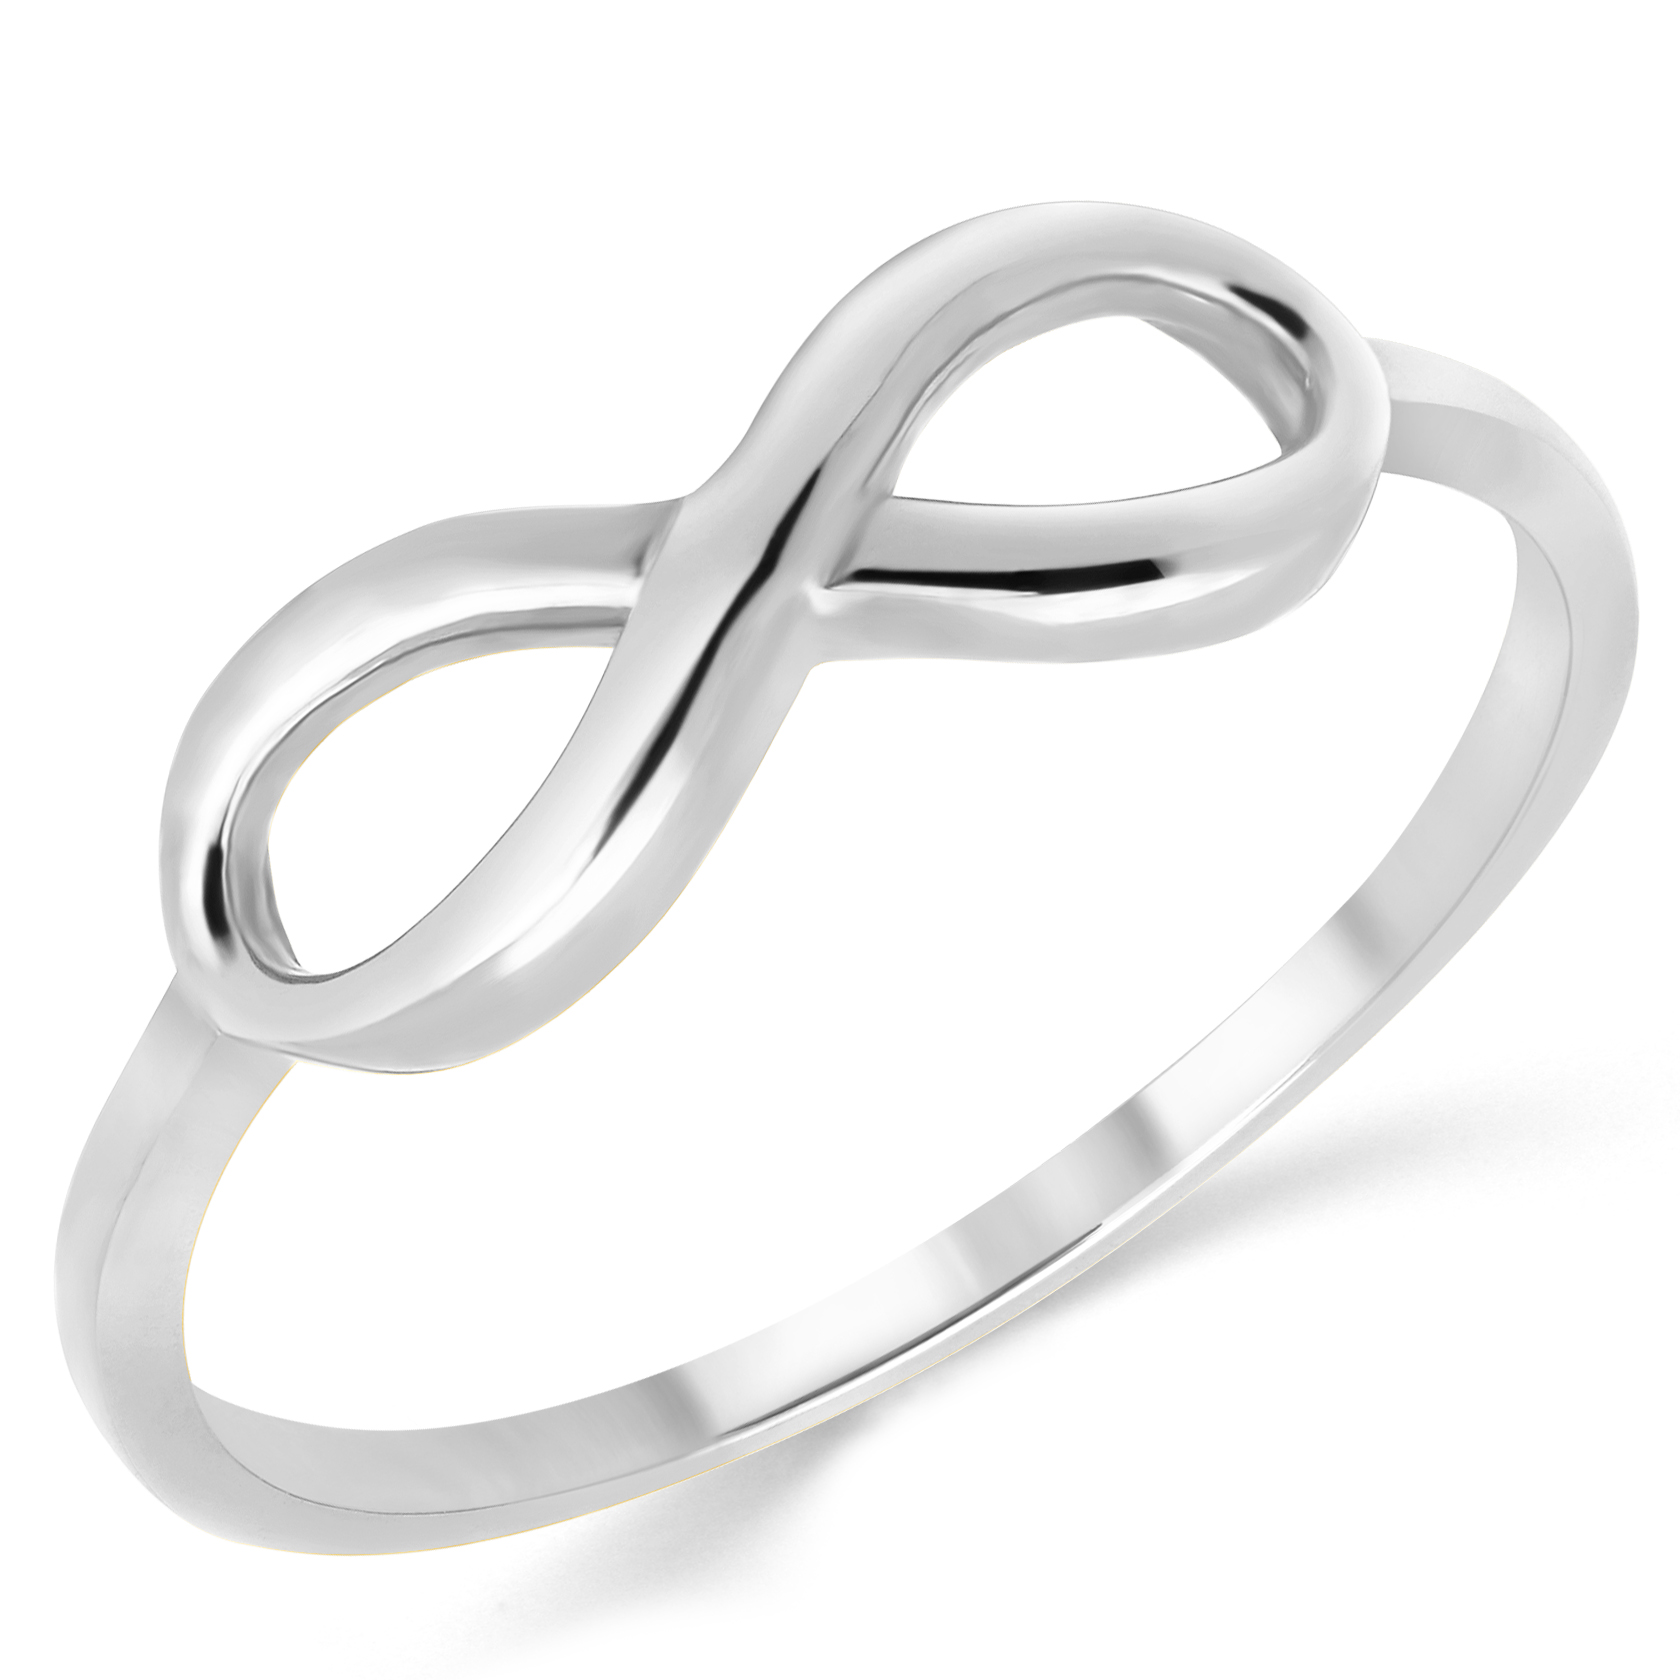 Solid 14K White Gold Infinity Anniversary Ring Band | eBay